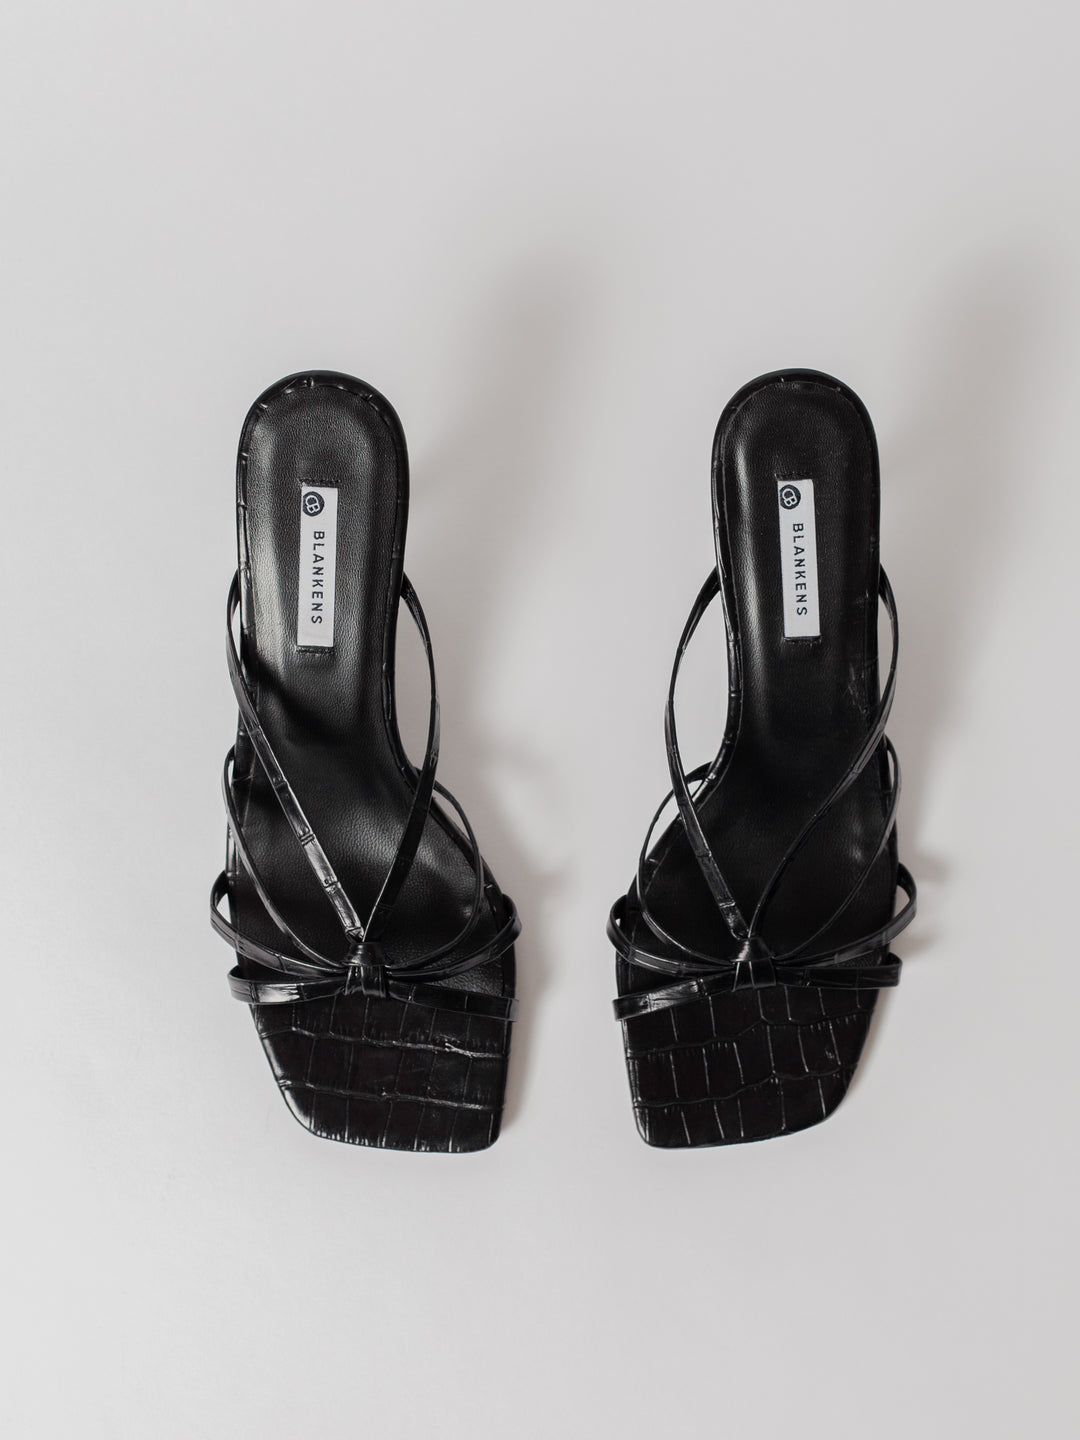 Blankens The Jennie Black heeled sandal in black croc